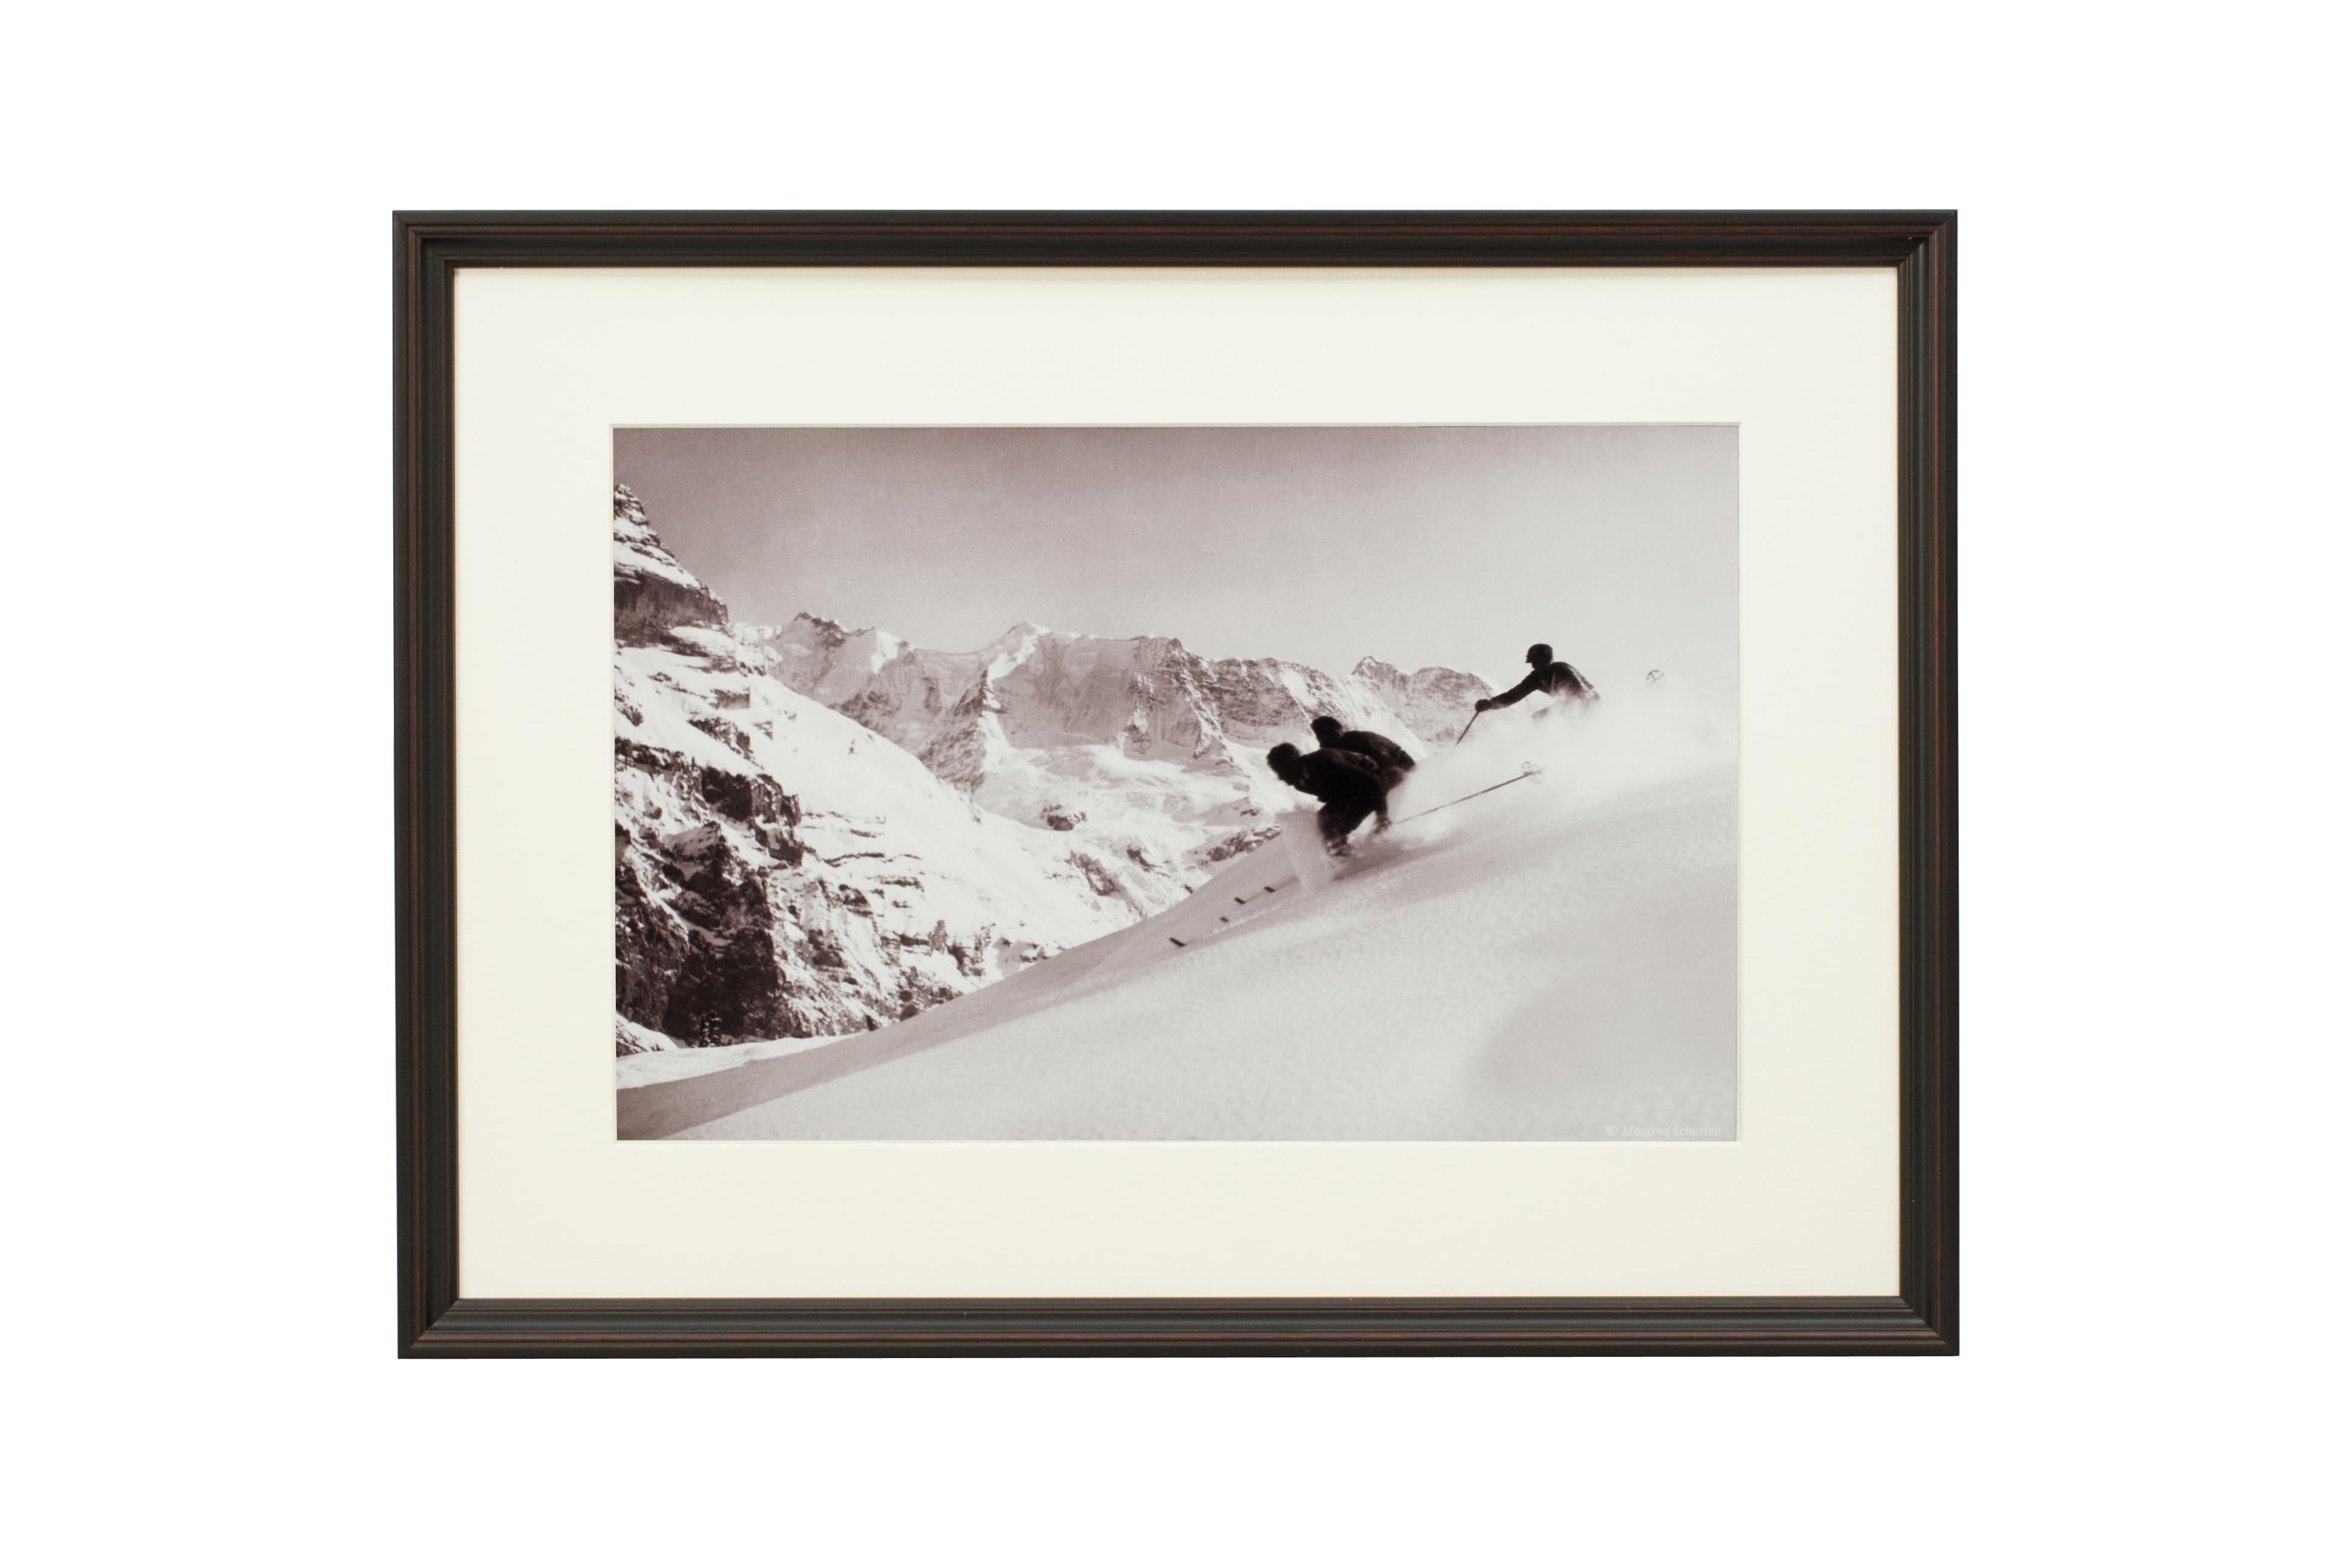 Photographie de ski alpin,SCHUSS en vente 4